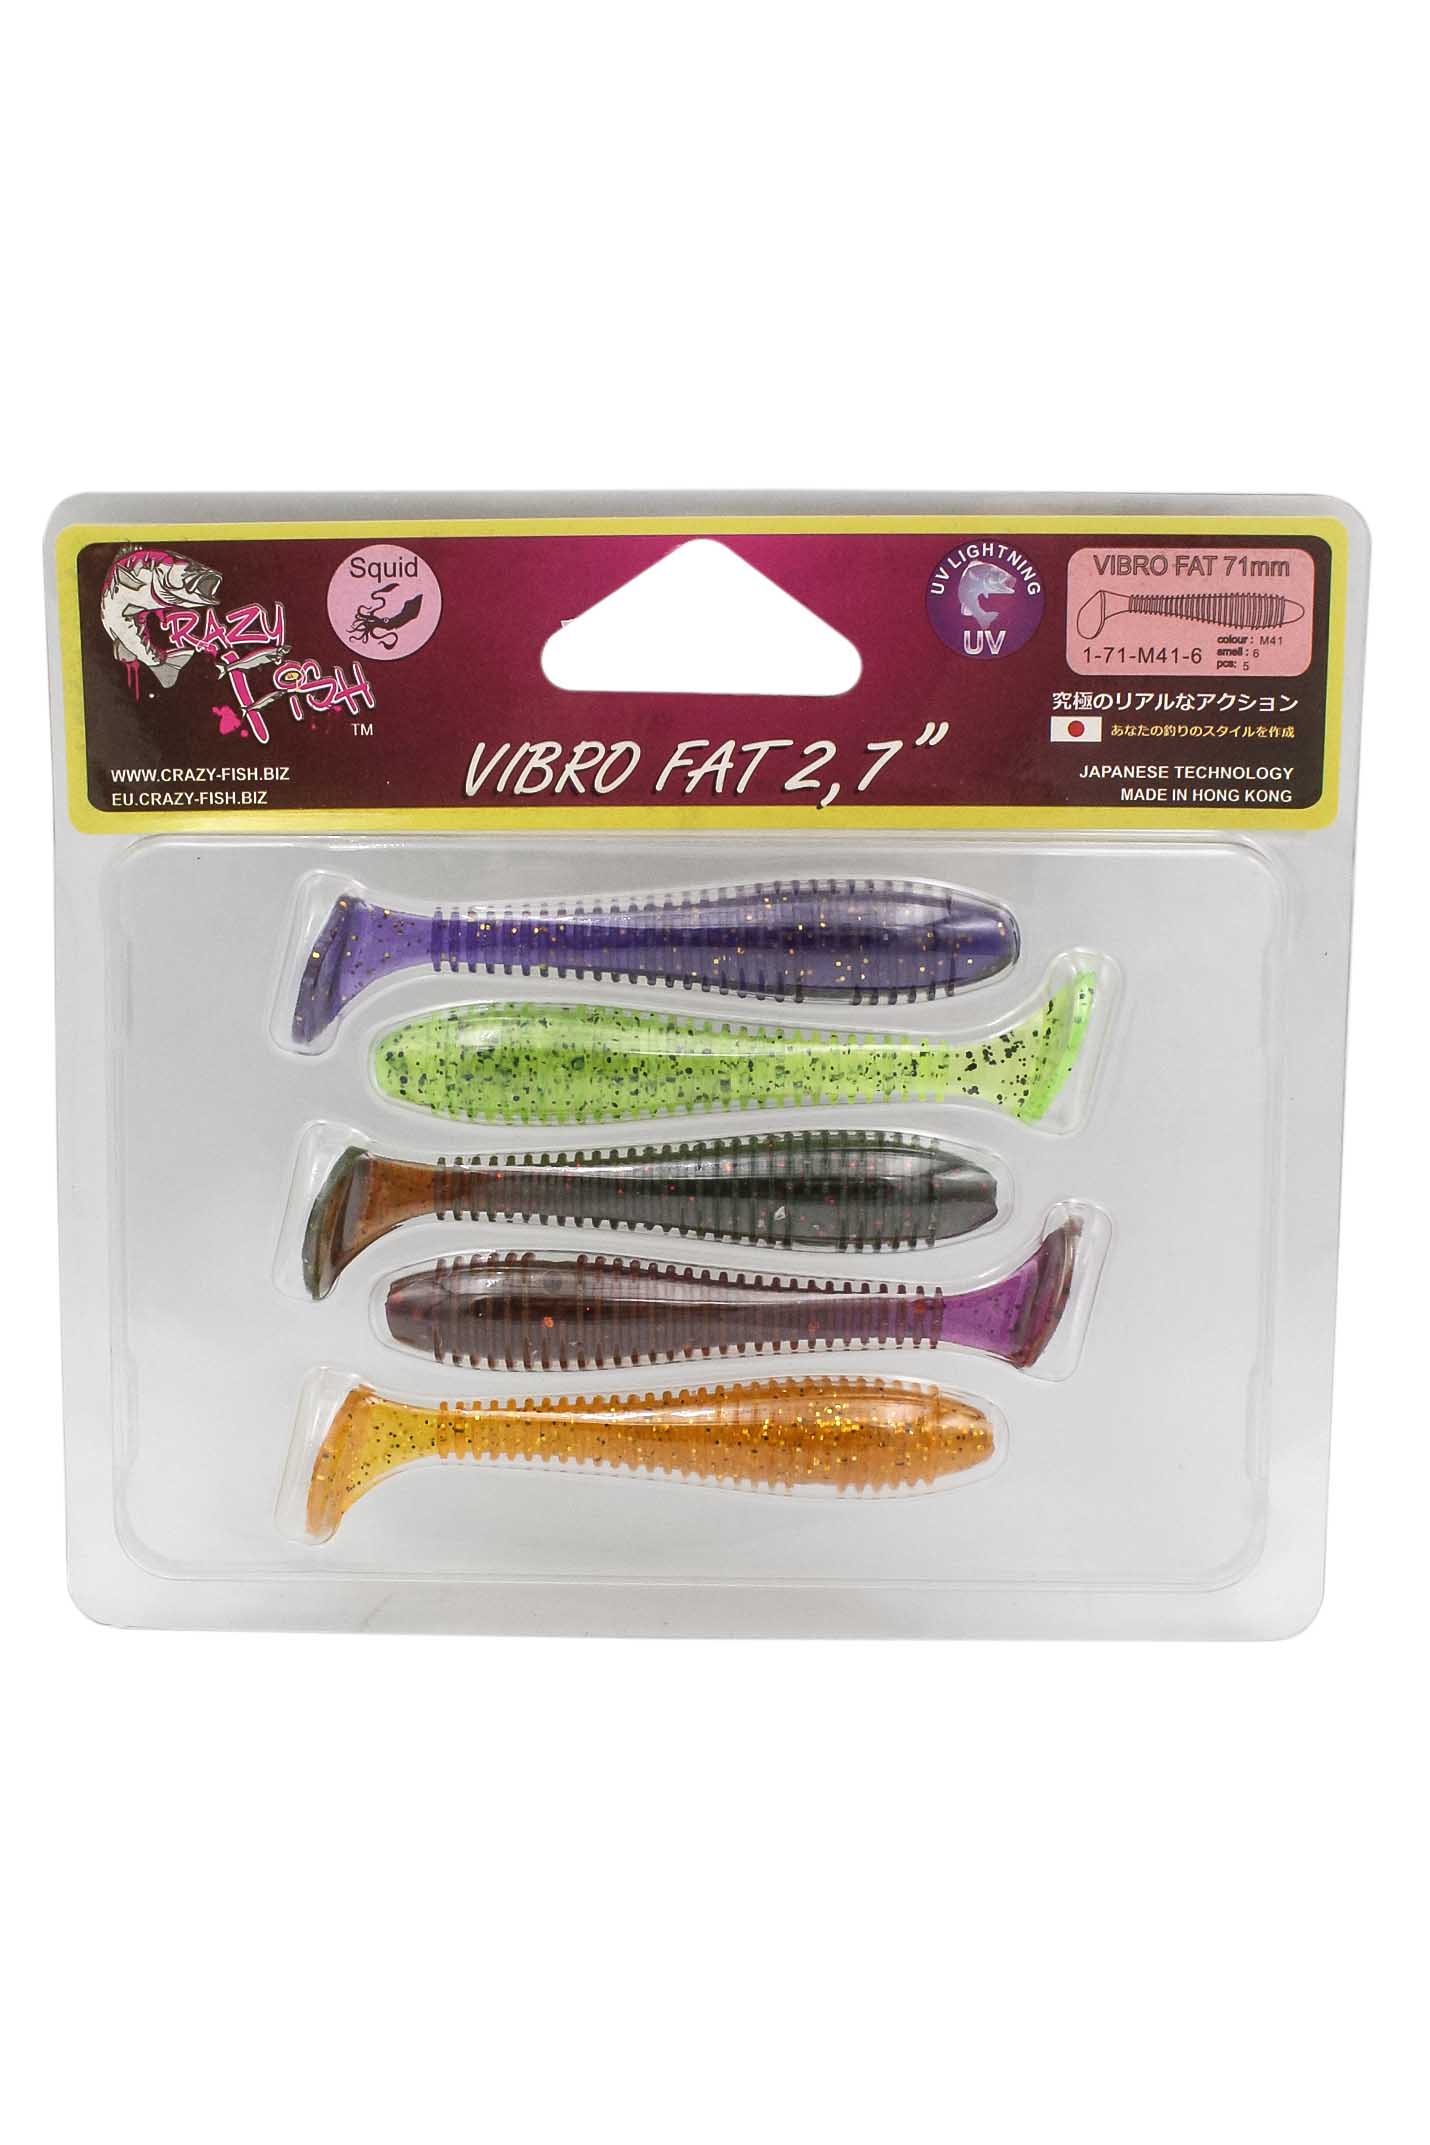 Приманка Crazy Fish Vibro fat 2,7'' 1-71-M41-6 - фото 1